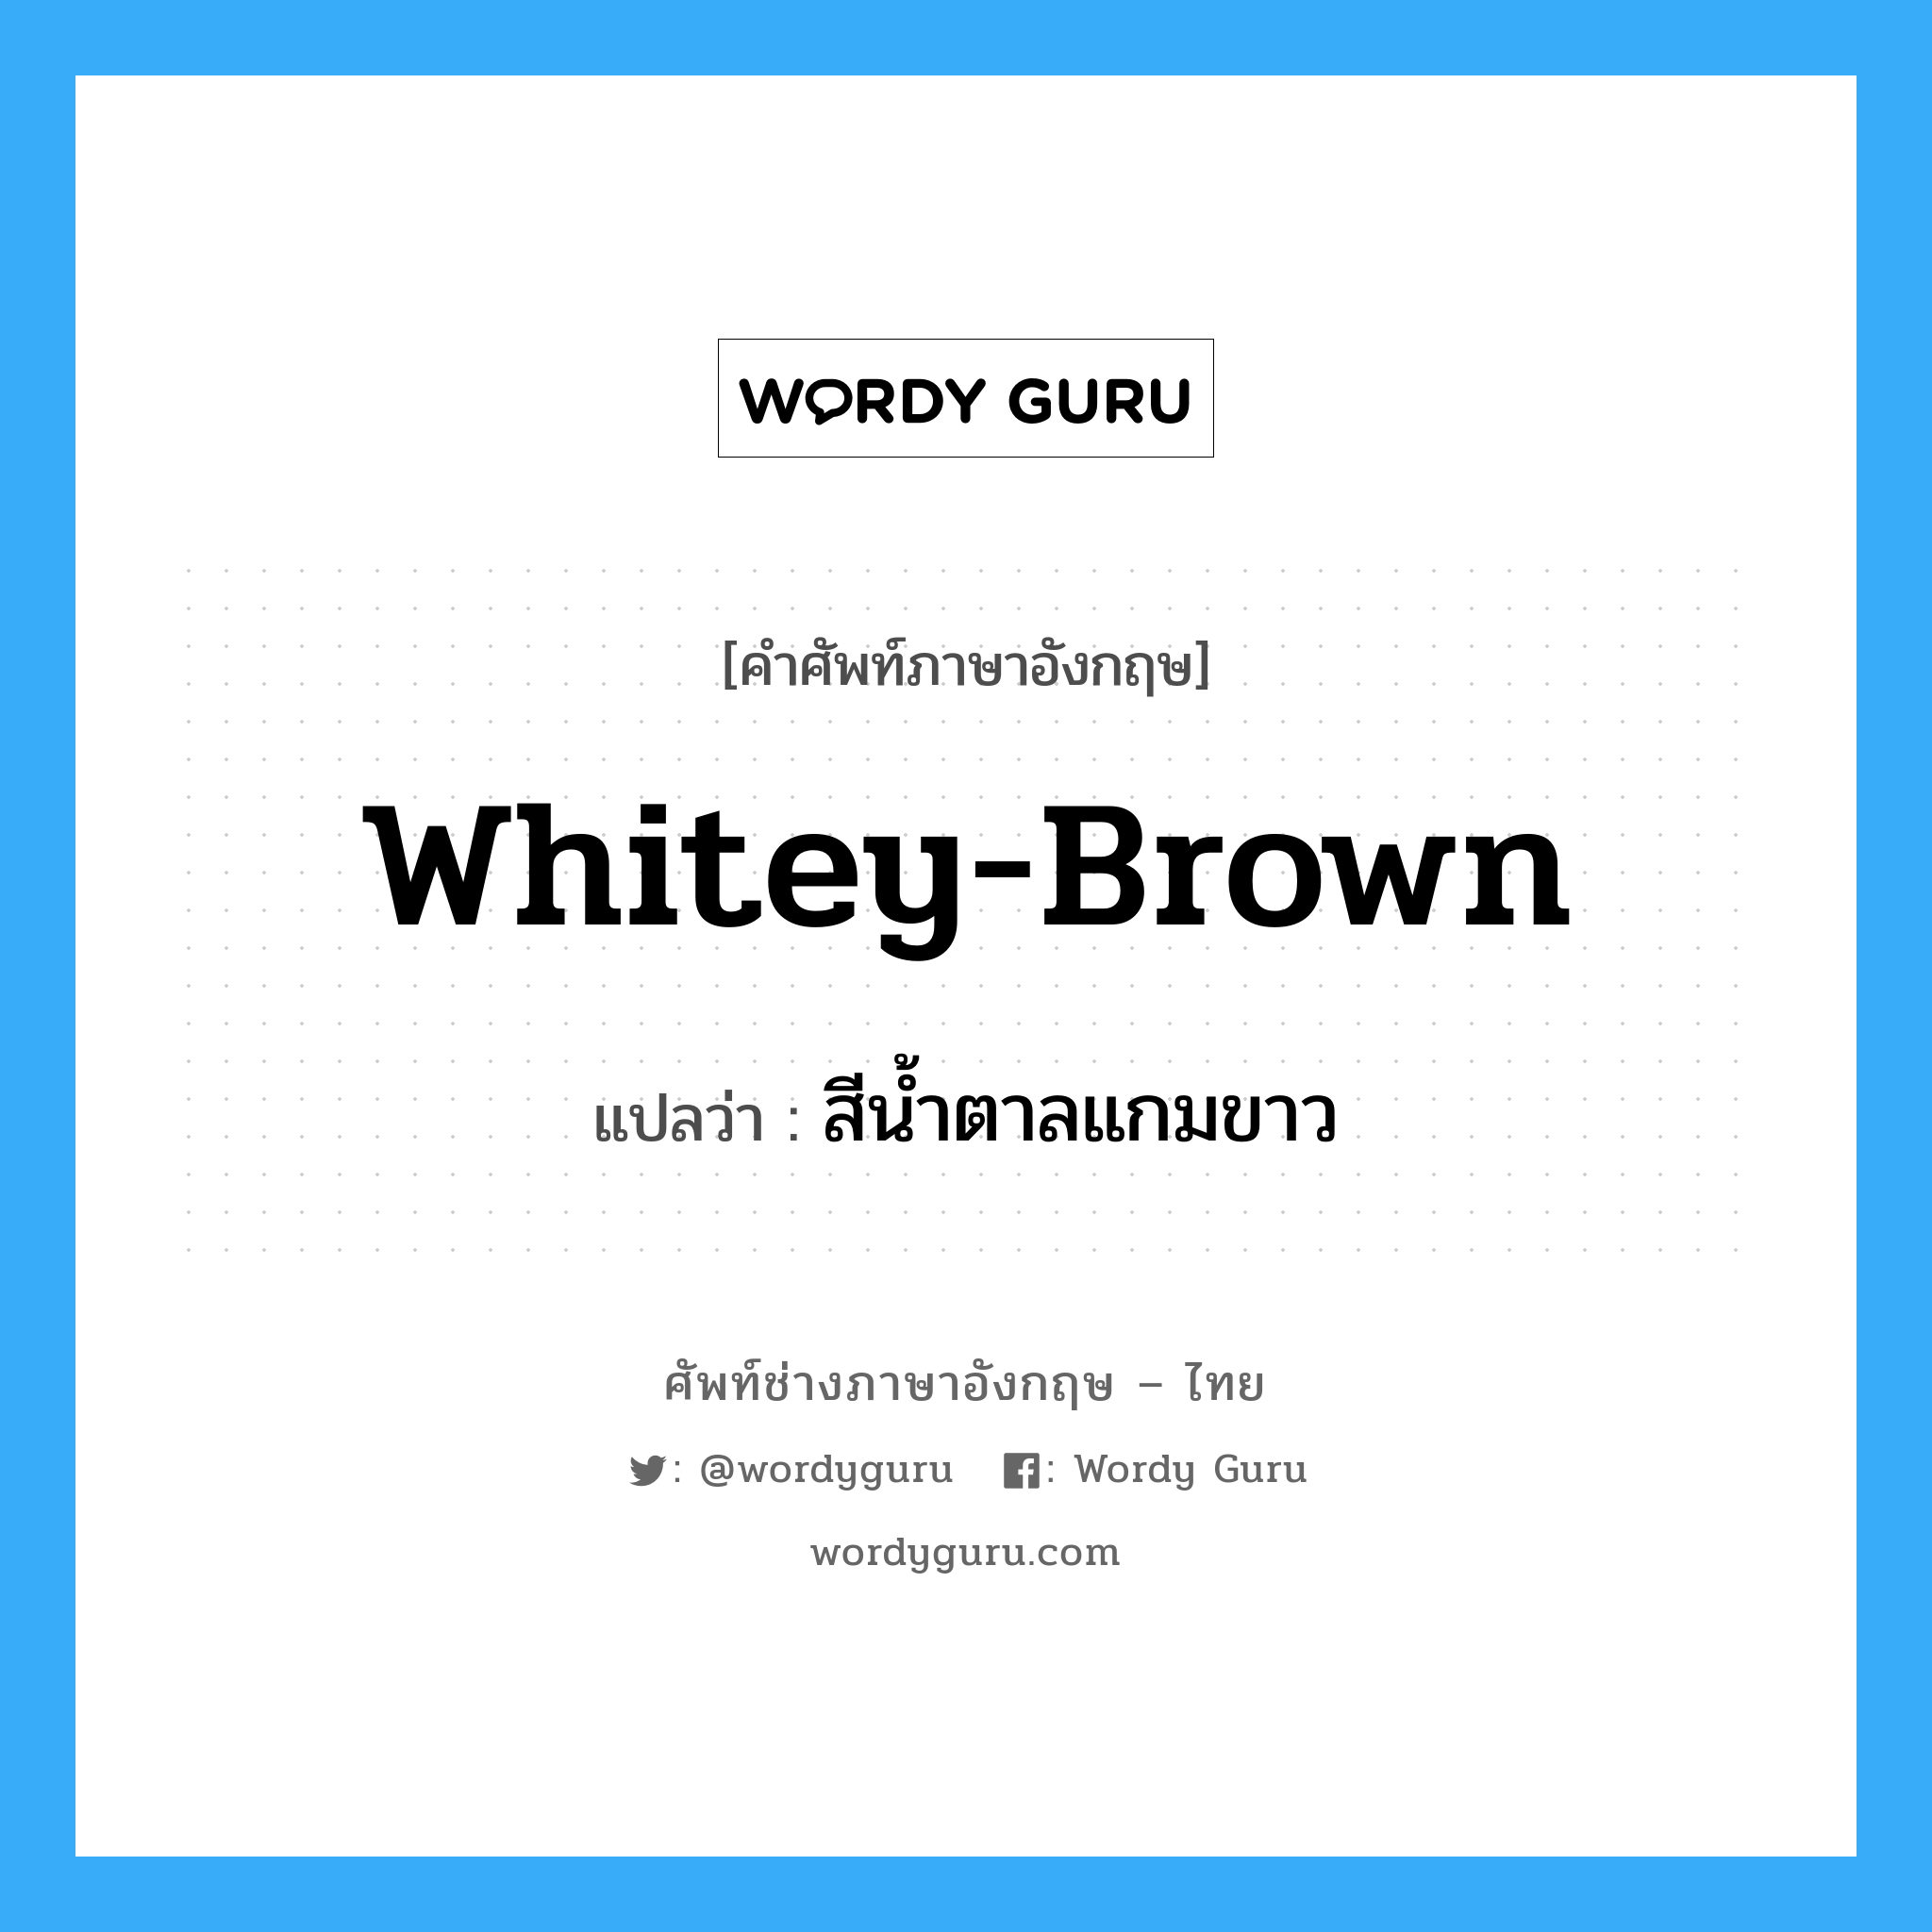 whitey-brown แปลว่า?, คำศัพท์ช่างภาษาอังกฤษ - ไทย whitey-brown คำศัพท์ภาษาอังกฤษ whitey-brown แปลว่า สีน้ำตาลแกมขาว